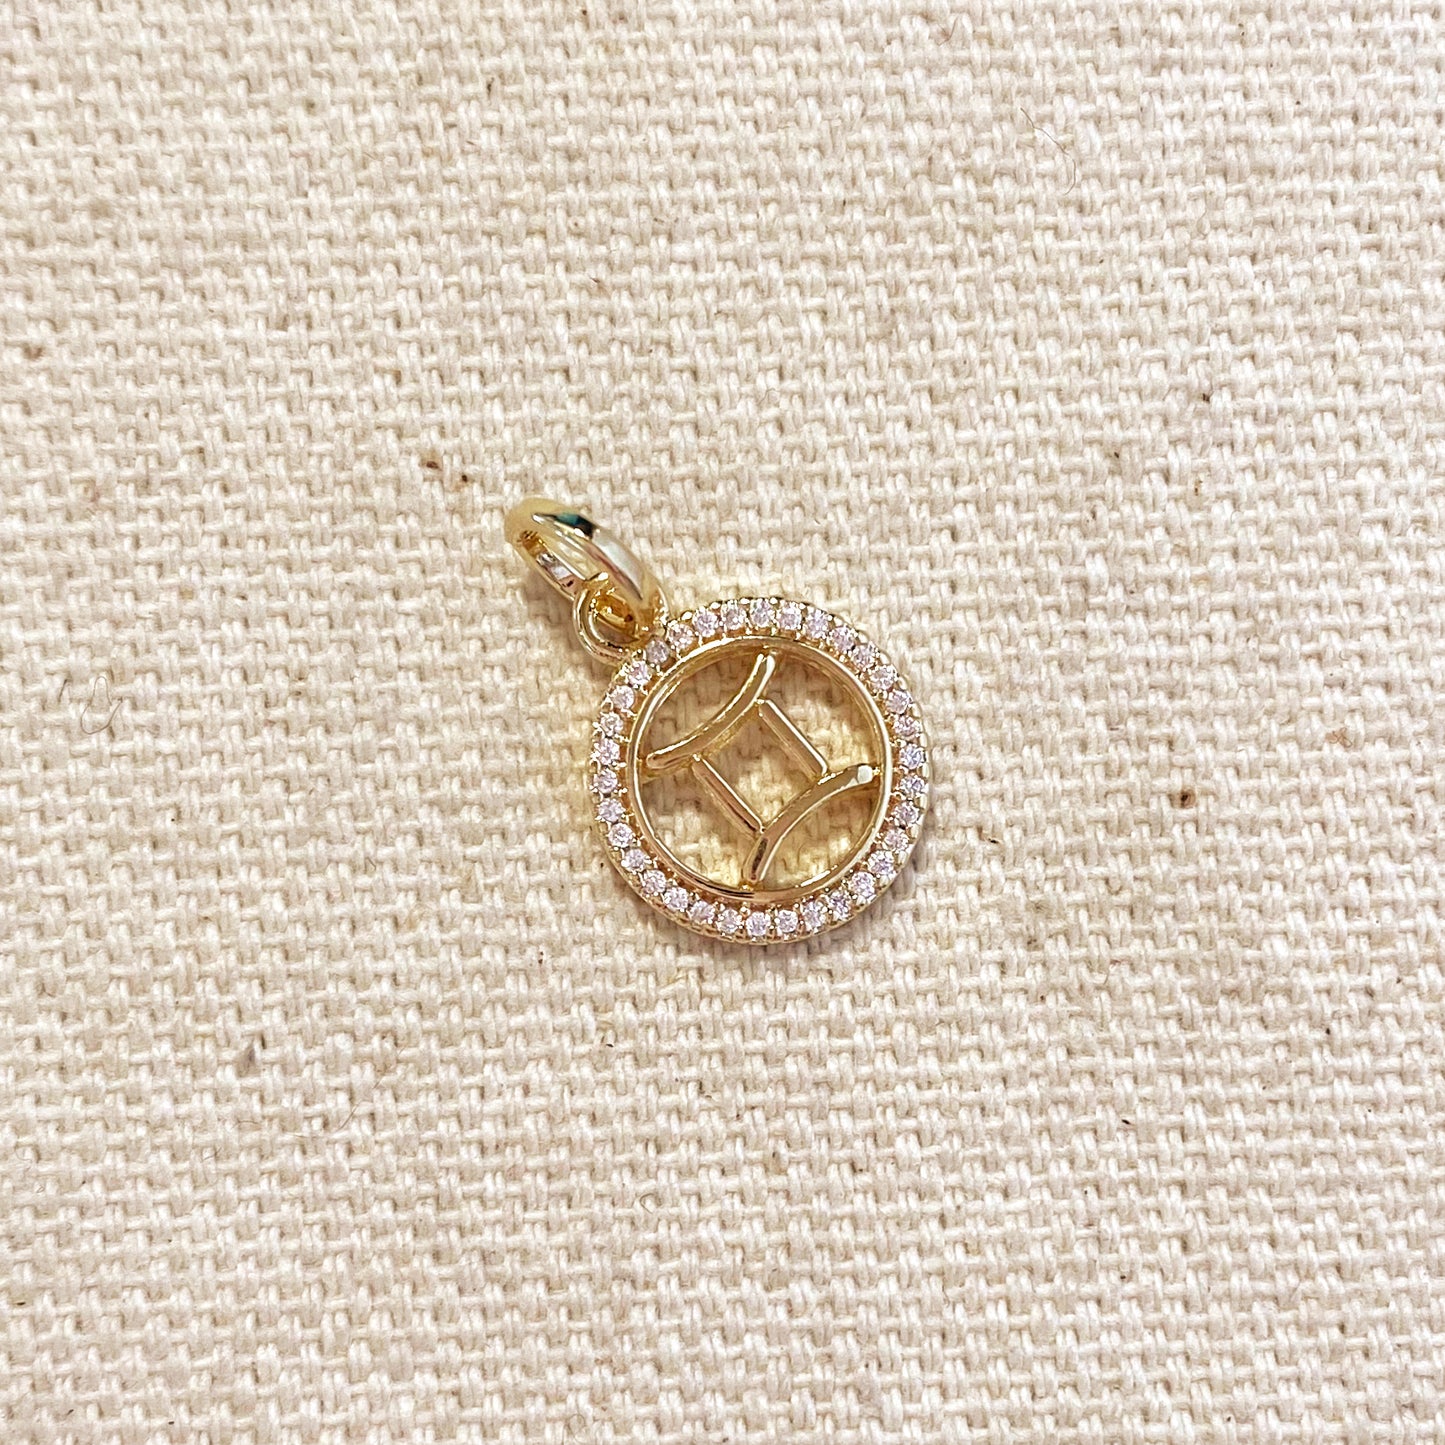 18k Gold Filled Mini Gemini Zodiac Pendant